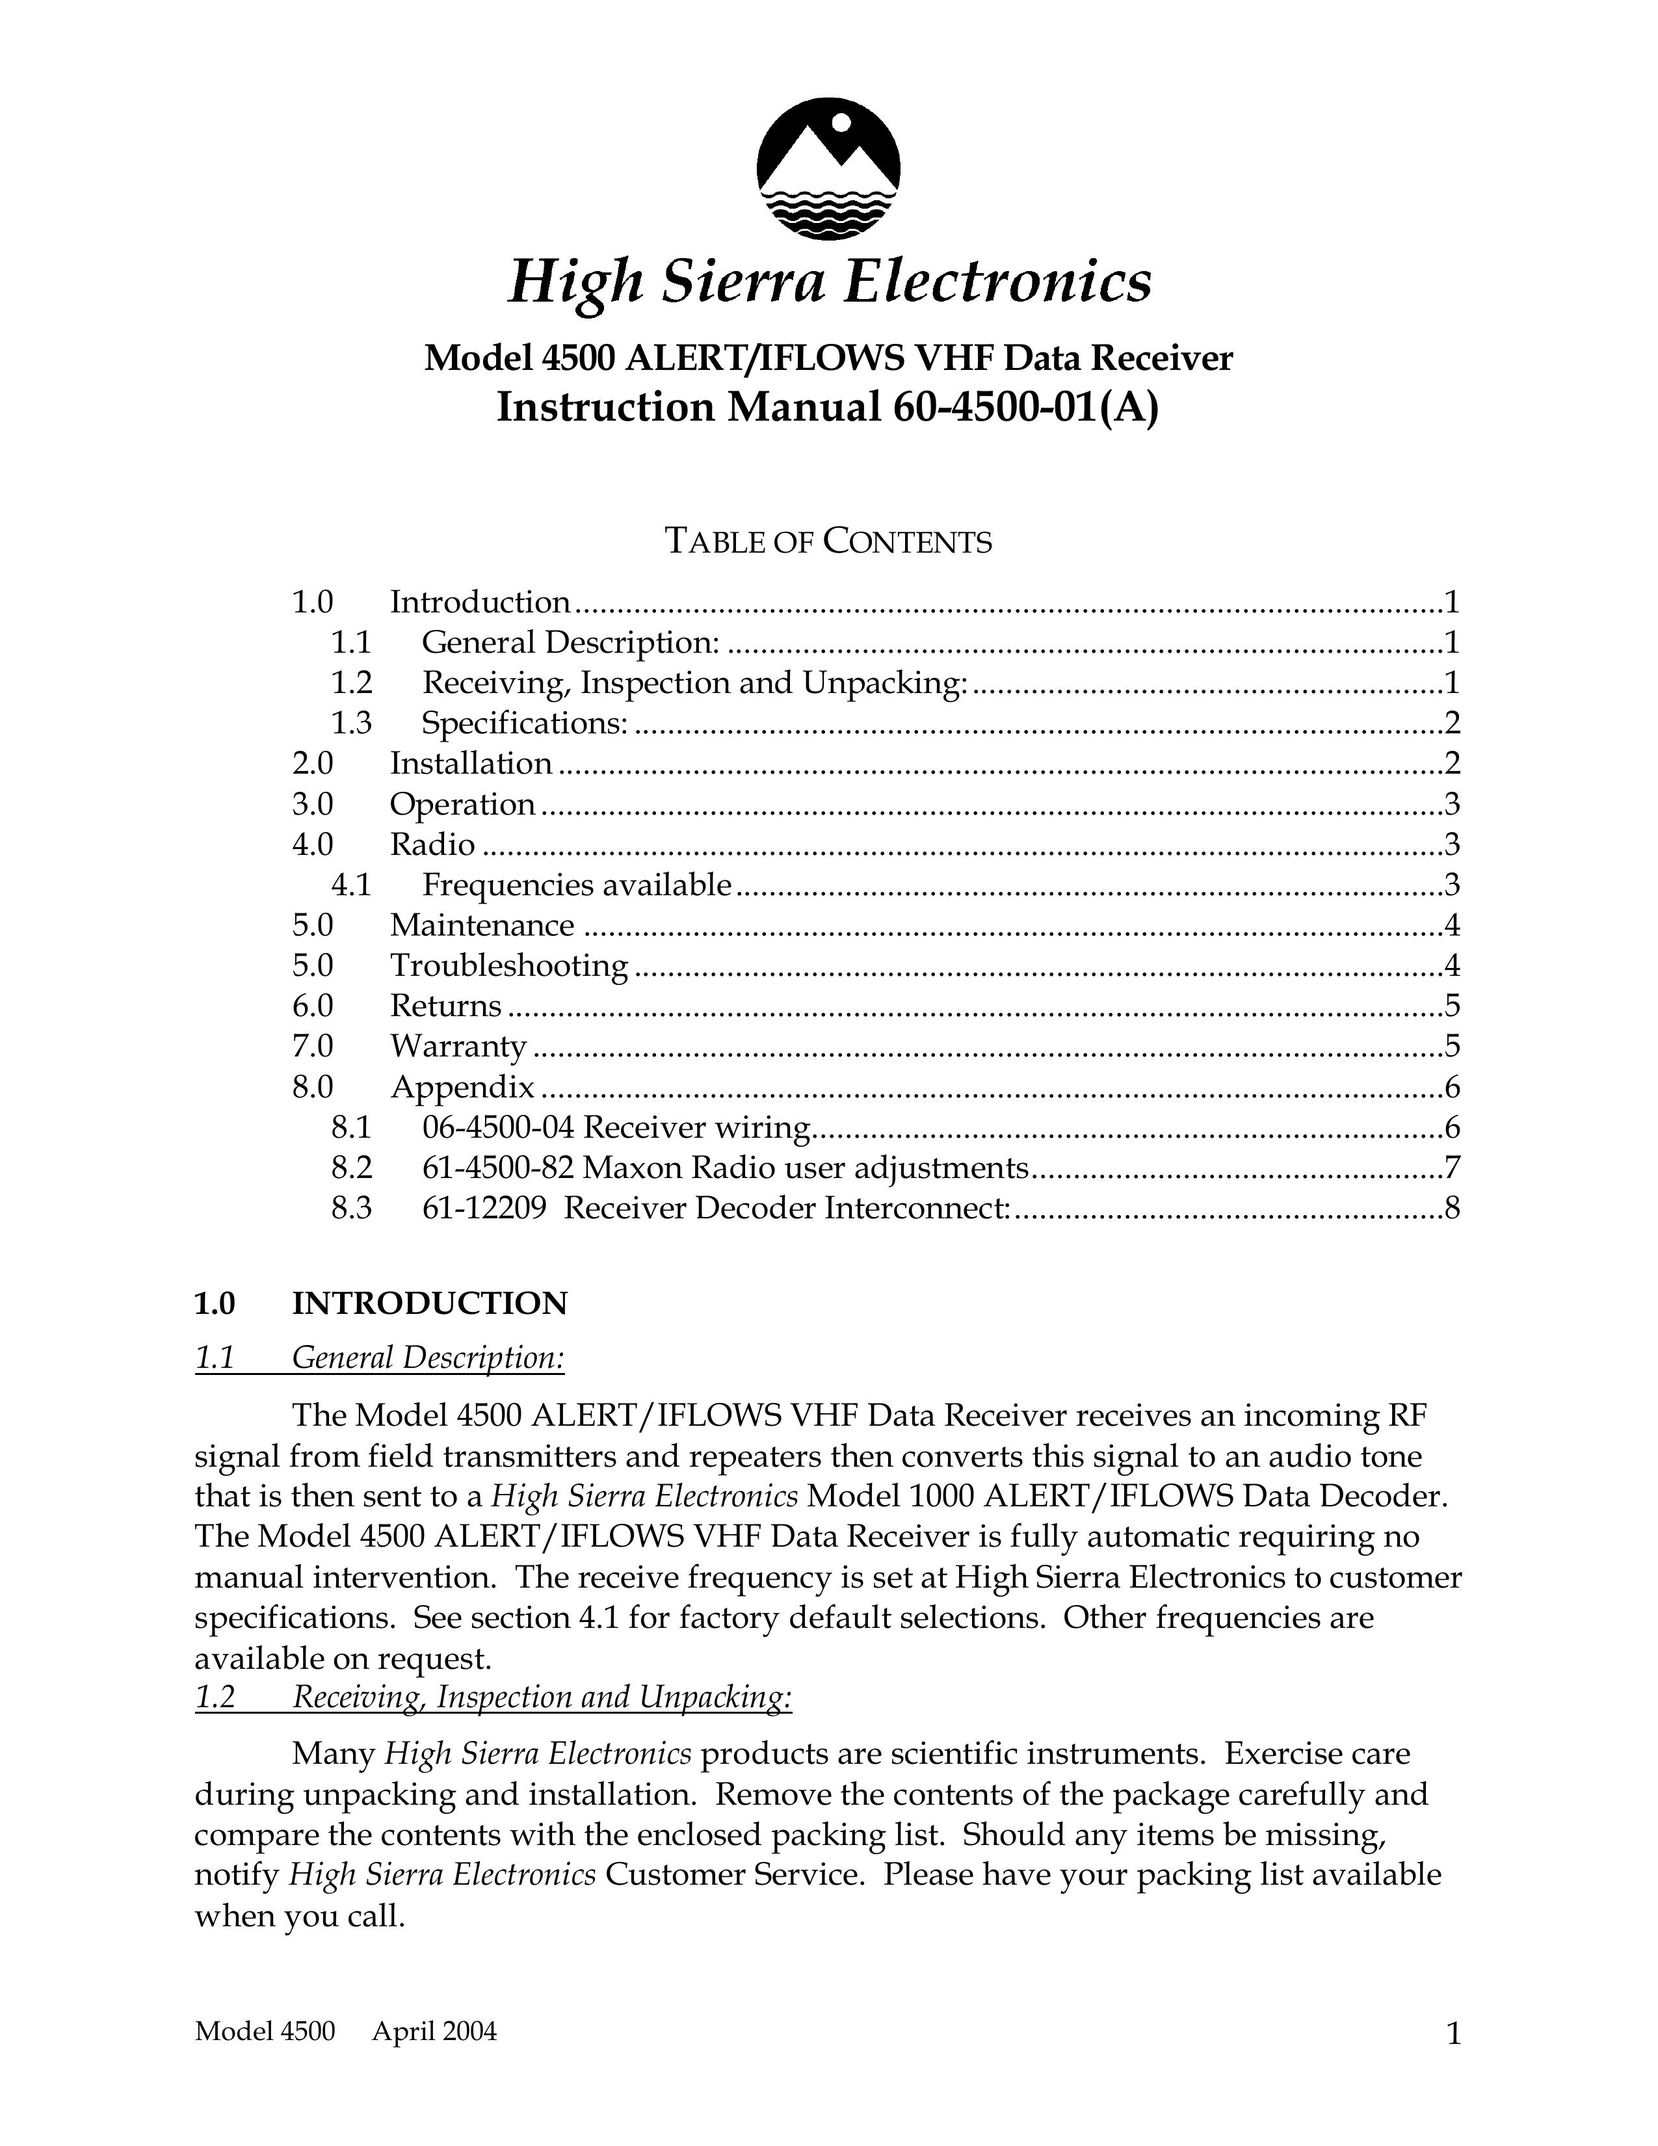 High Sierra Alert/IFlows VHF Data Receiver Stereo Receiver User Manual